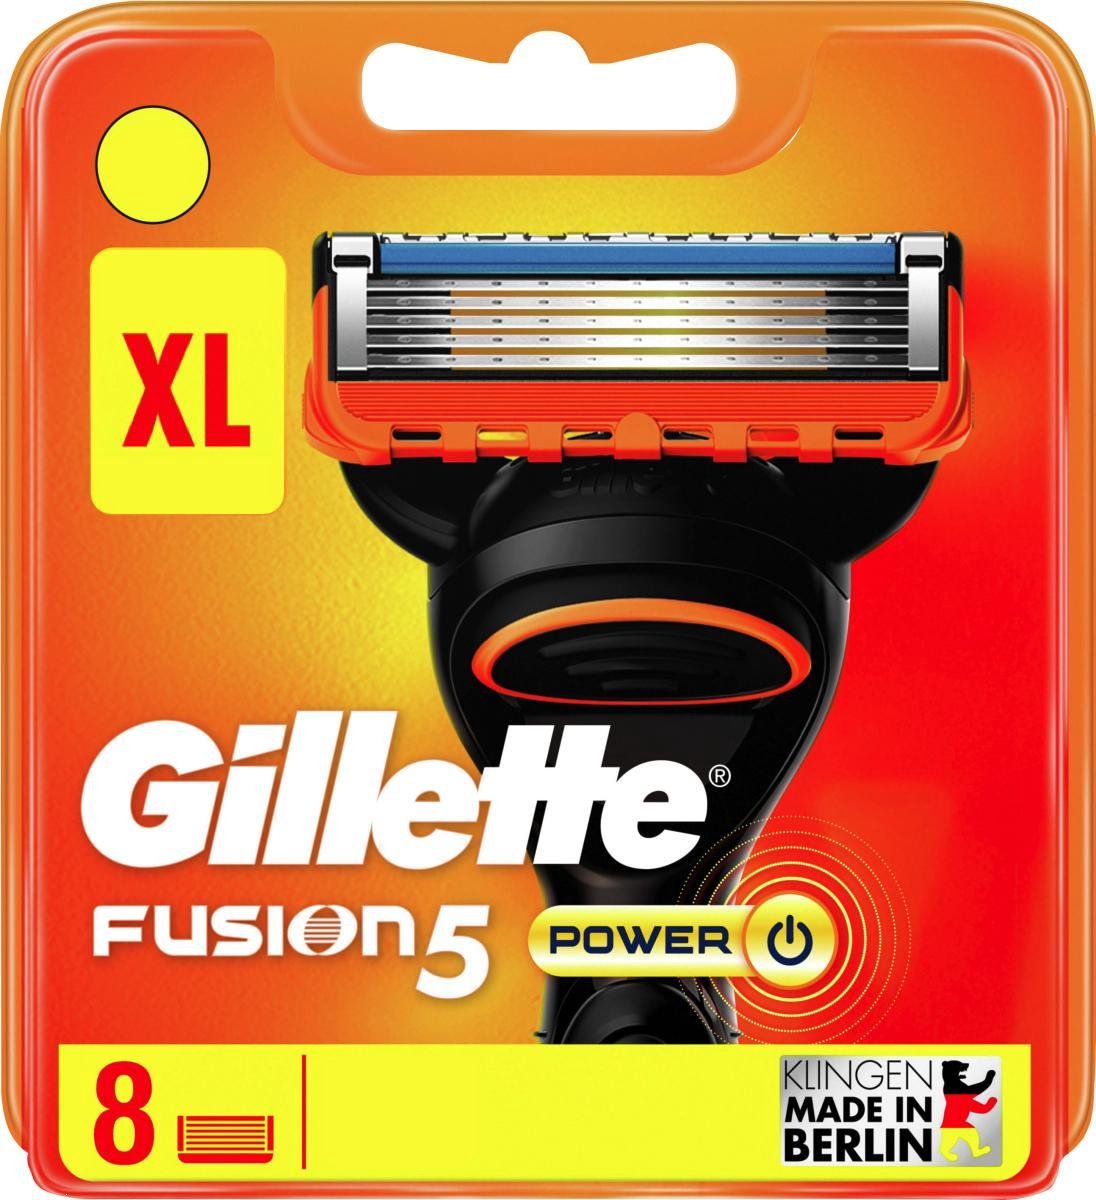 Gillette Fusion5 Power Scheermesjes Voor Mannen - 8 Navulmesjes - XL verpakking - Gillette